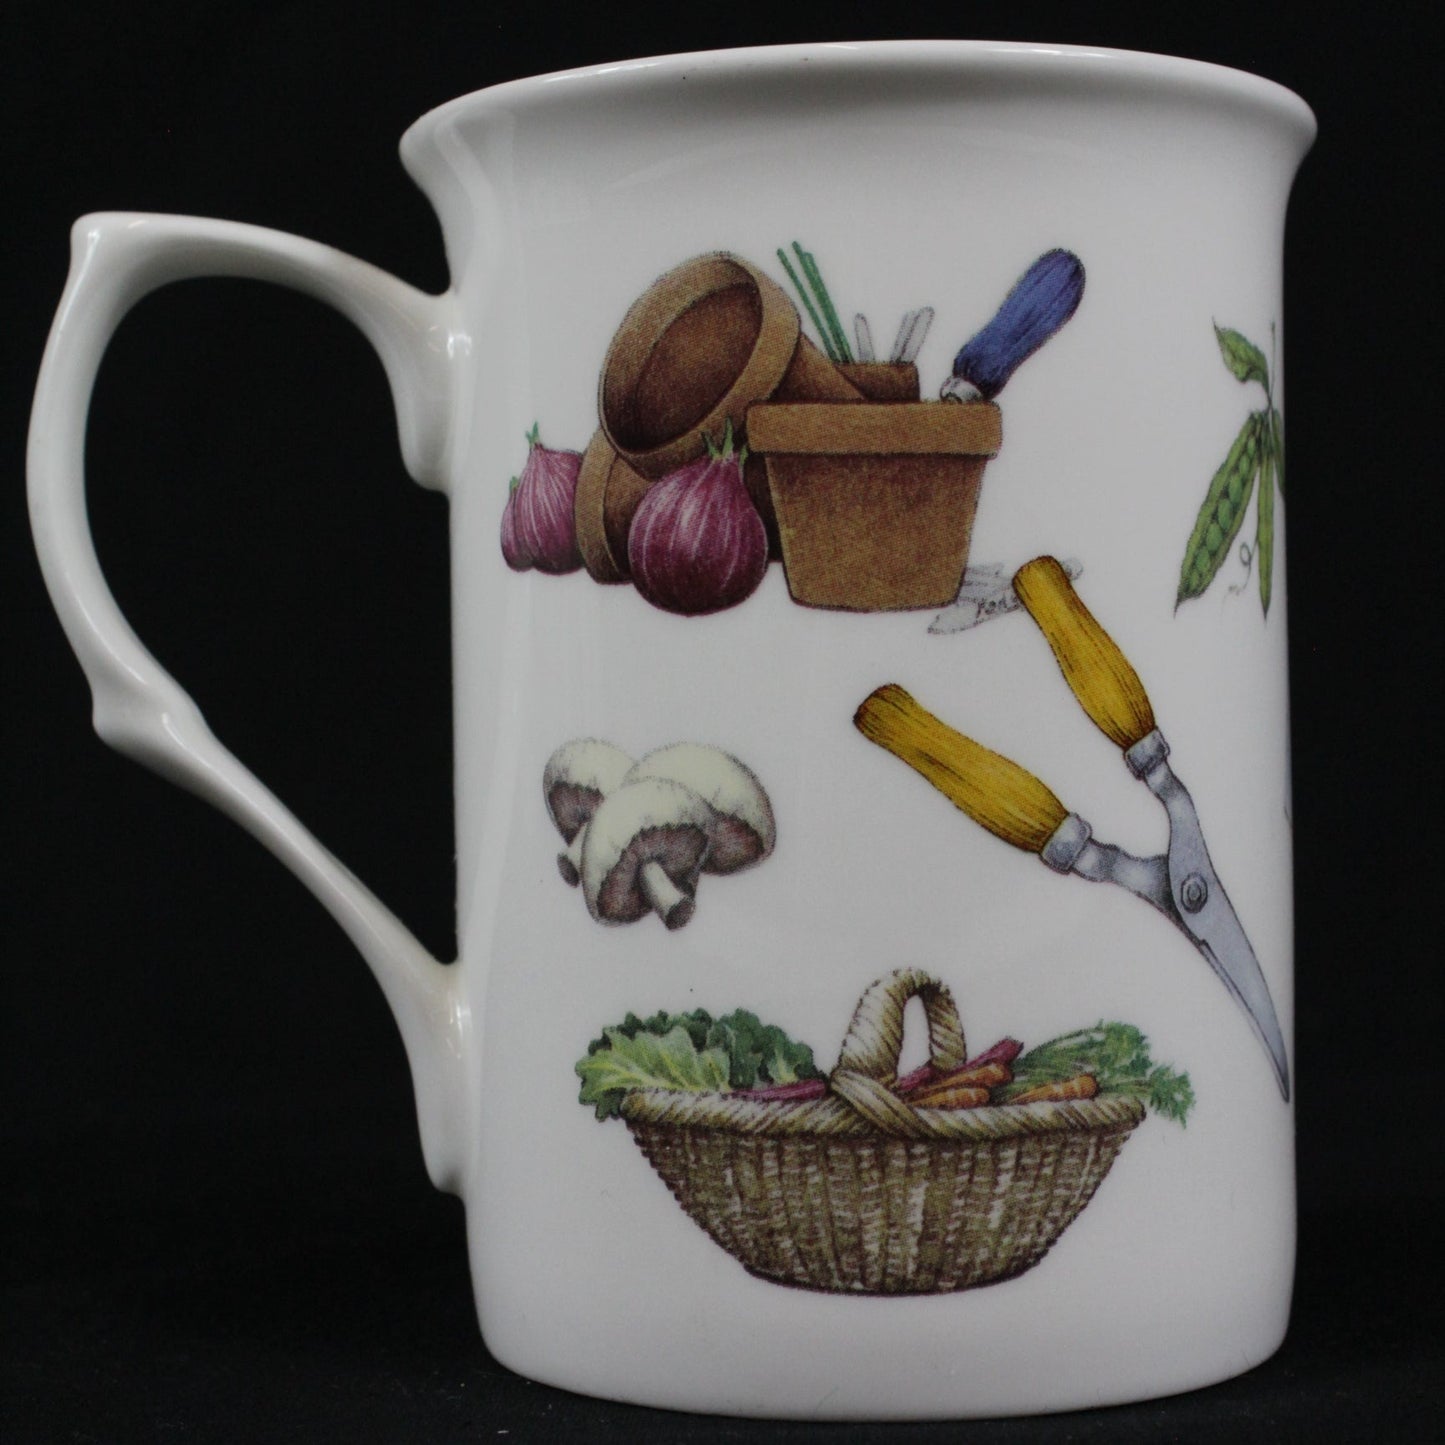 Gardening Tools & Vegetables Mug